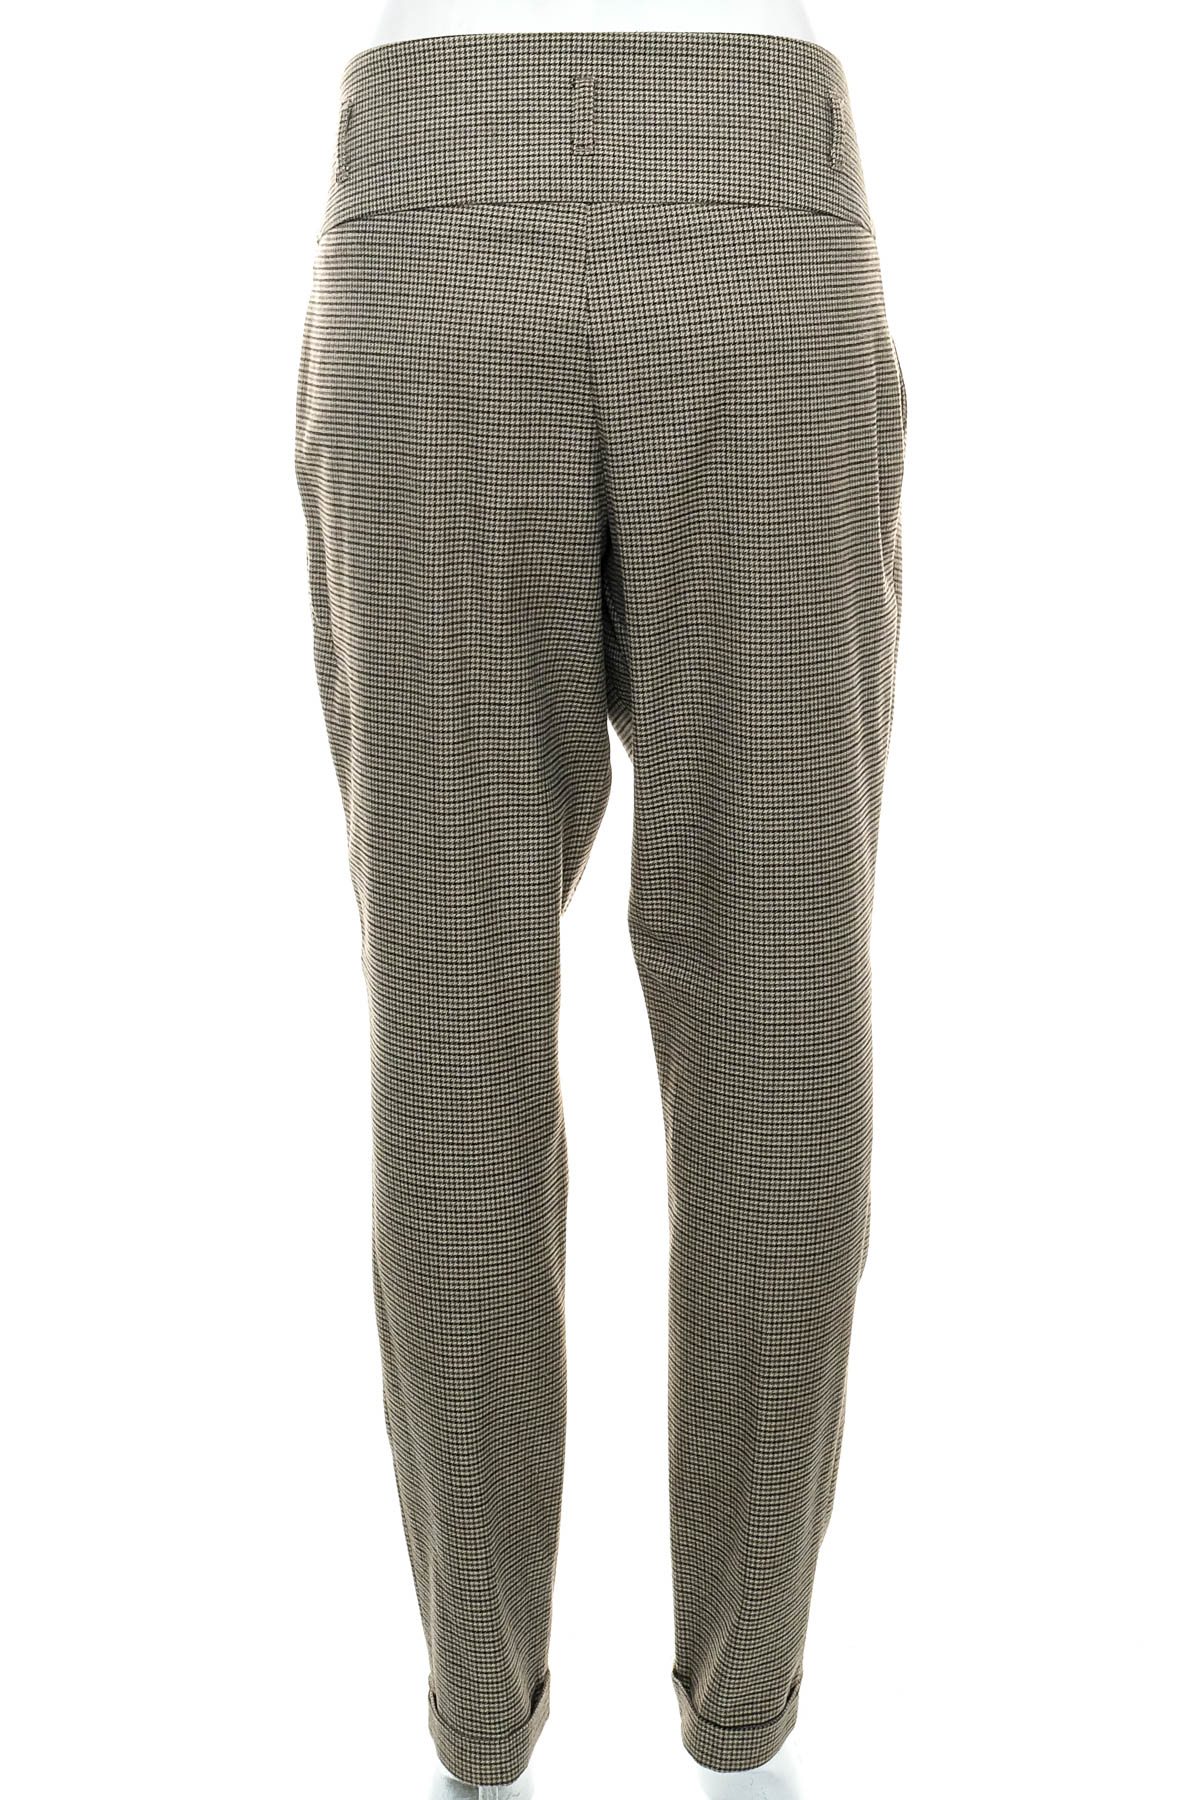 Pantaloni de damă - KISCHE - 1